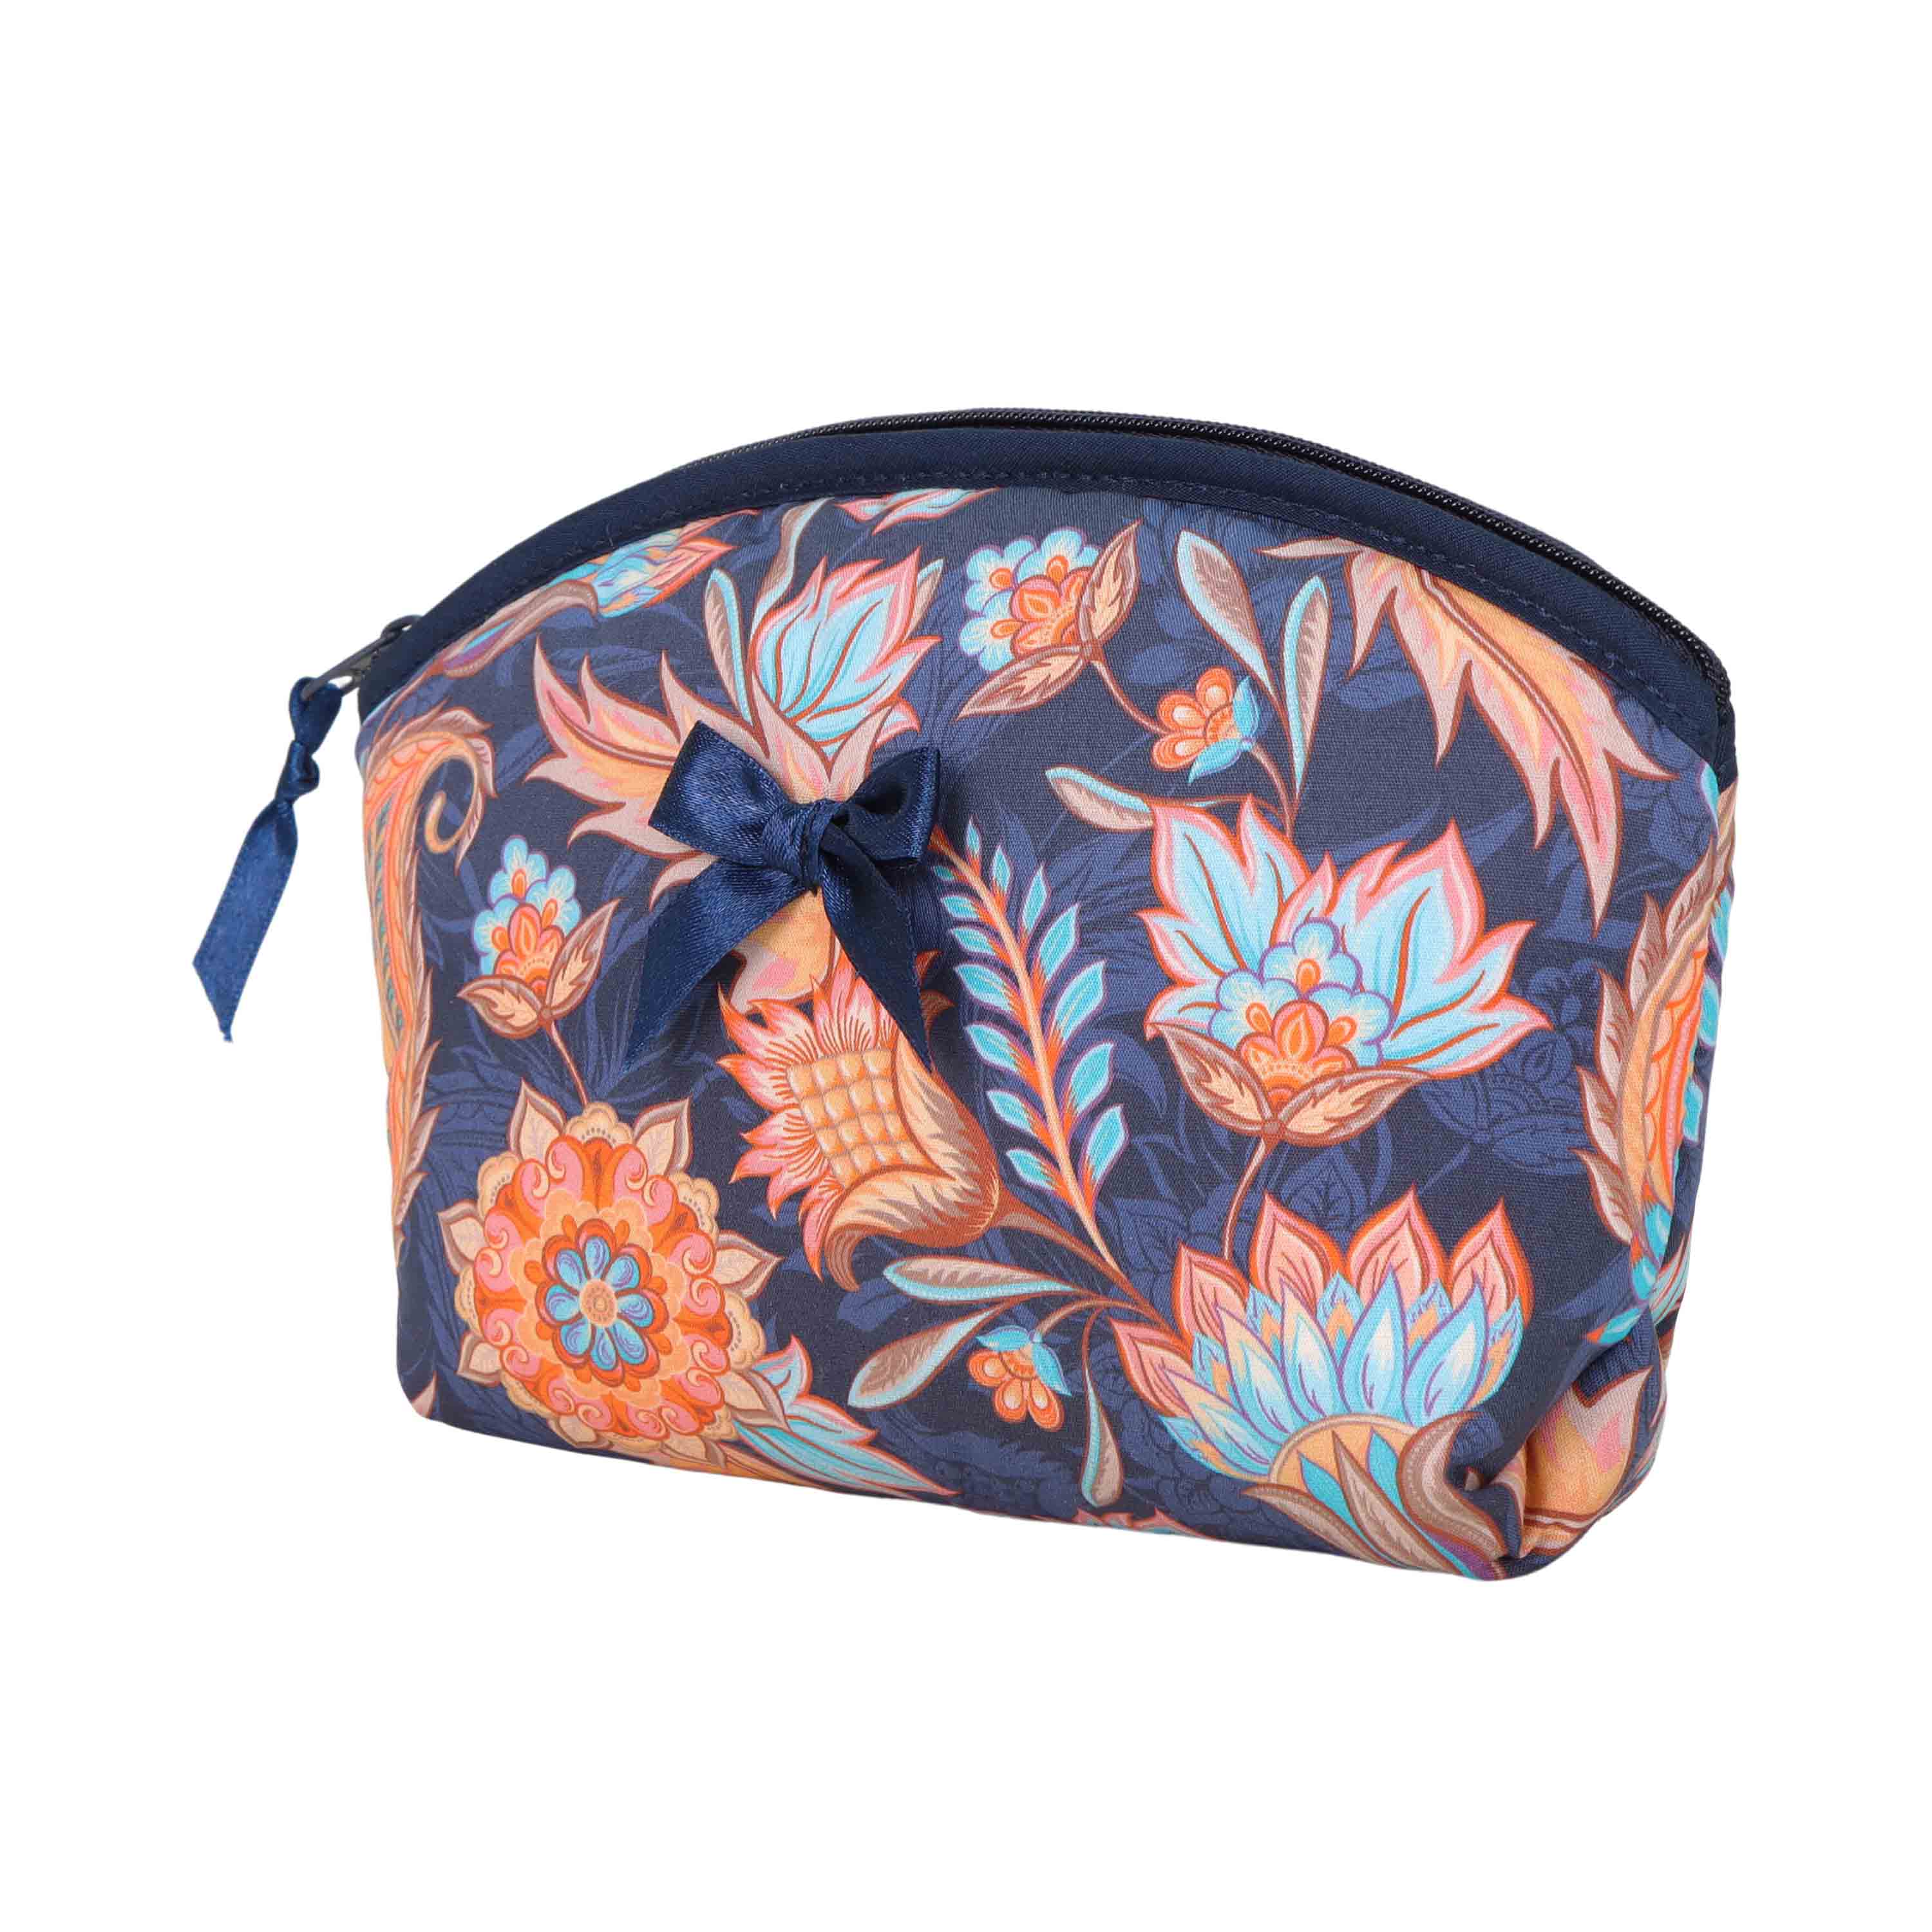 NaRaYa Foldable Shopping Bag & Matching Cosmetic Bag - New in Sealed  Package | eBay